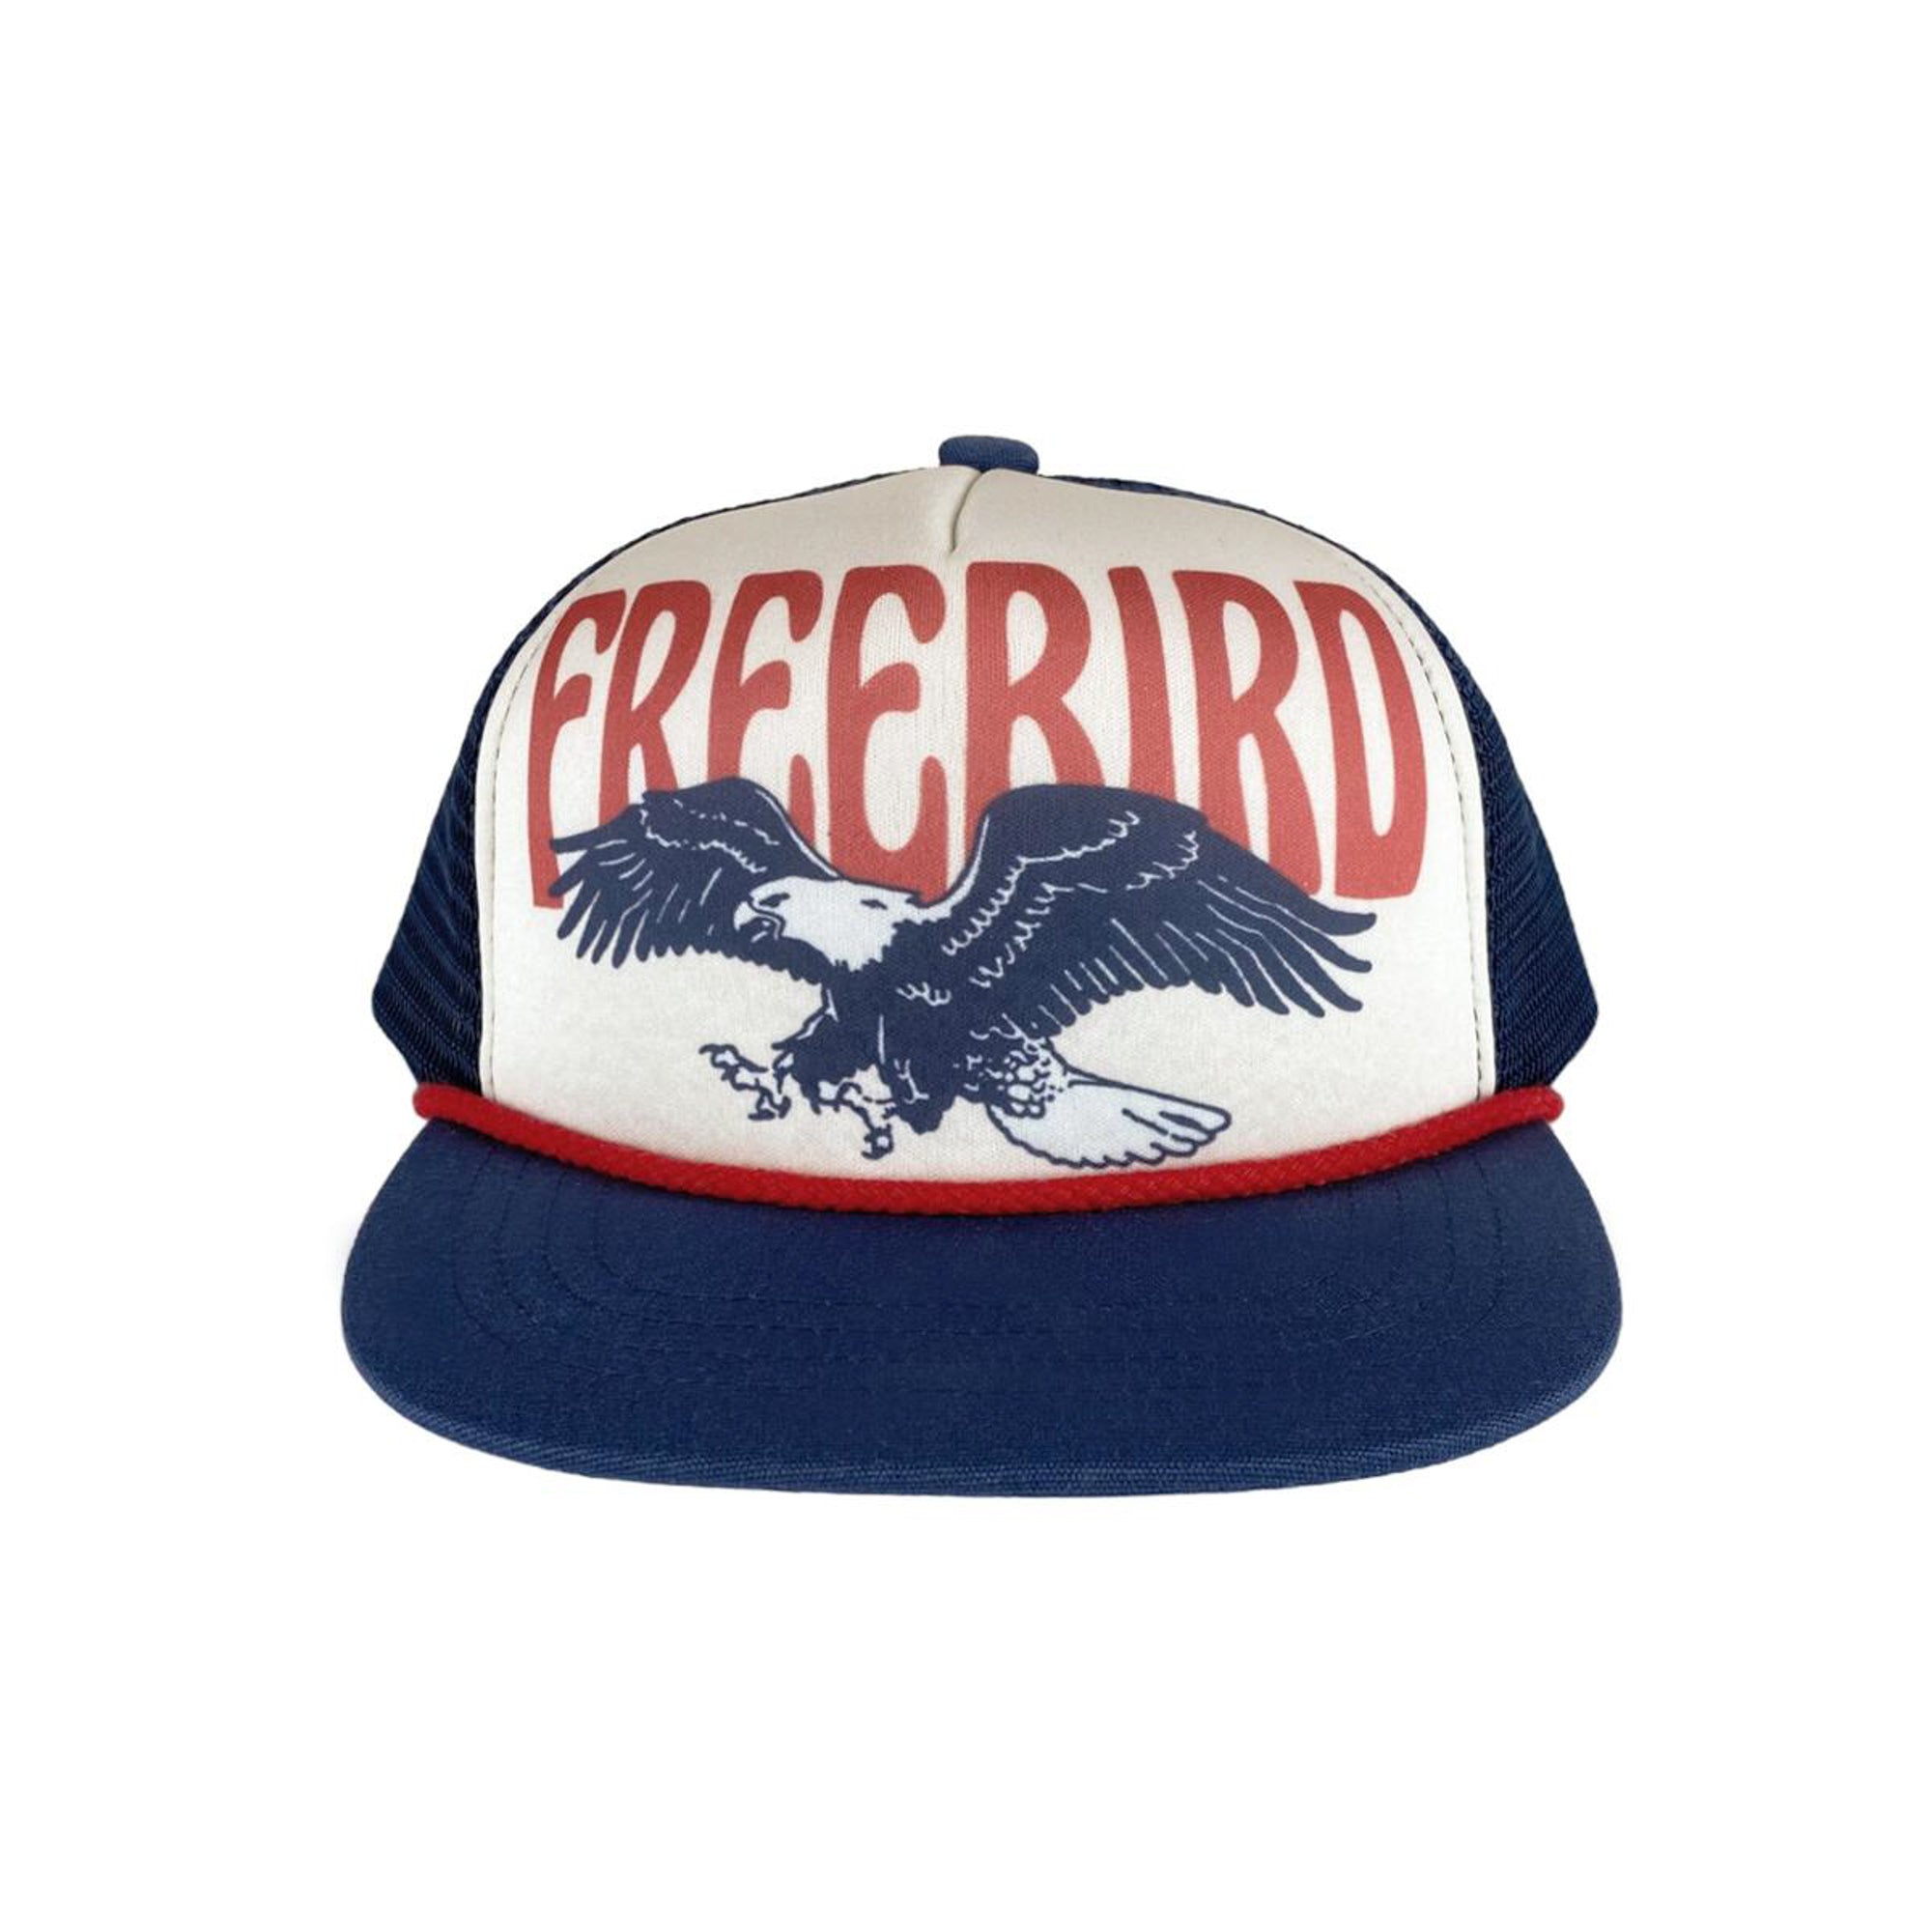 Tiny Whales_Free Bird Trucker hat_Headwear